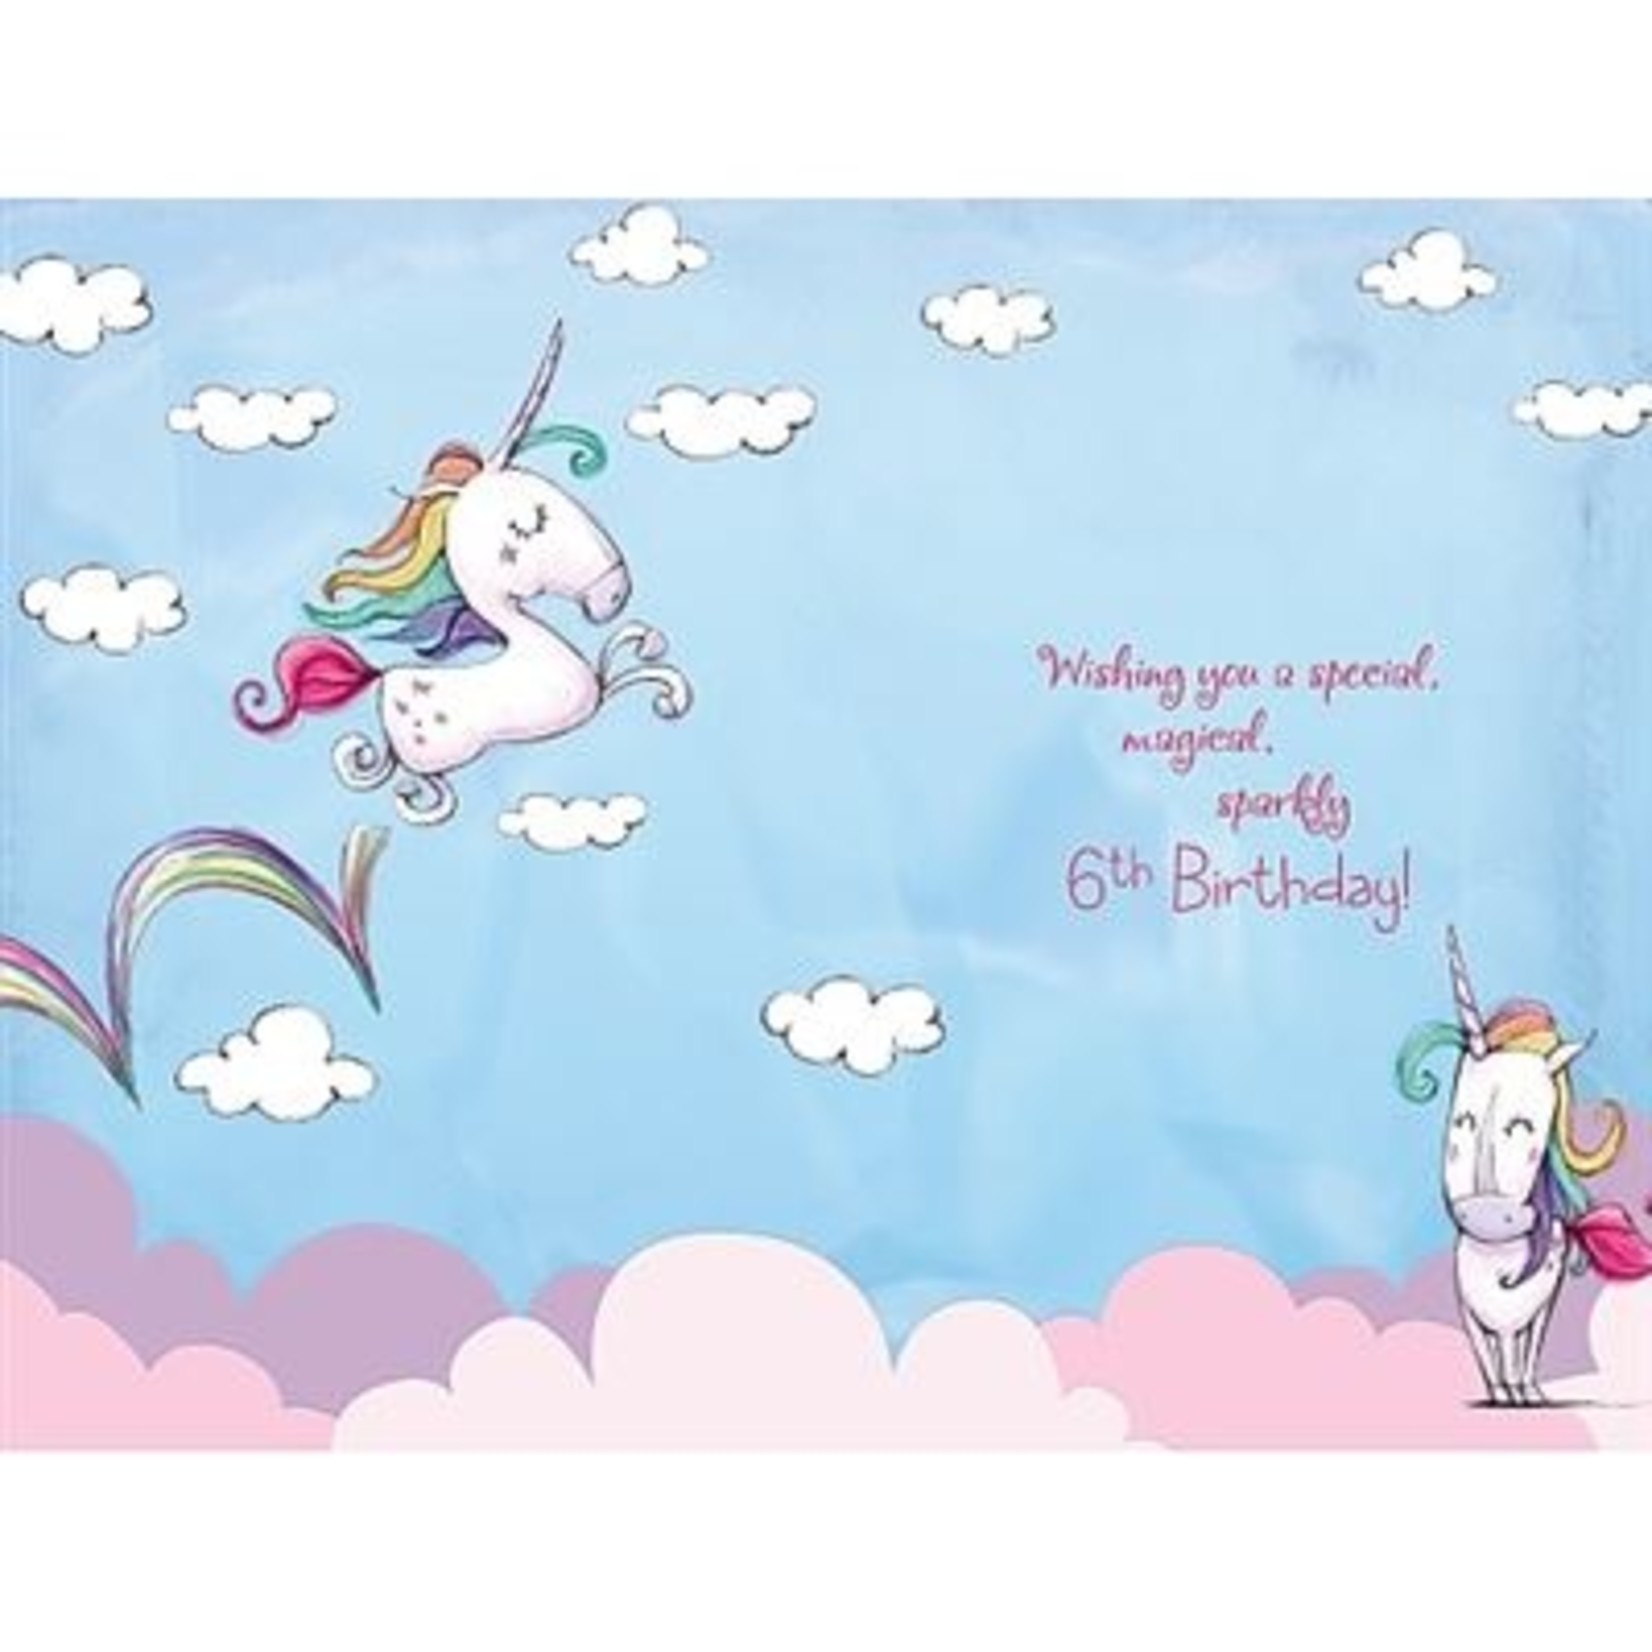 Wishing Well Studios Unicorn 6th Birthday Card